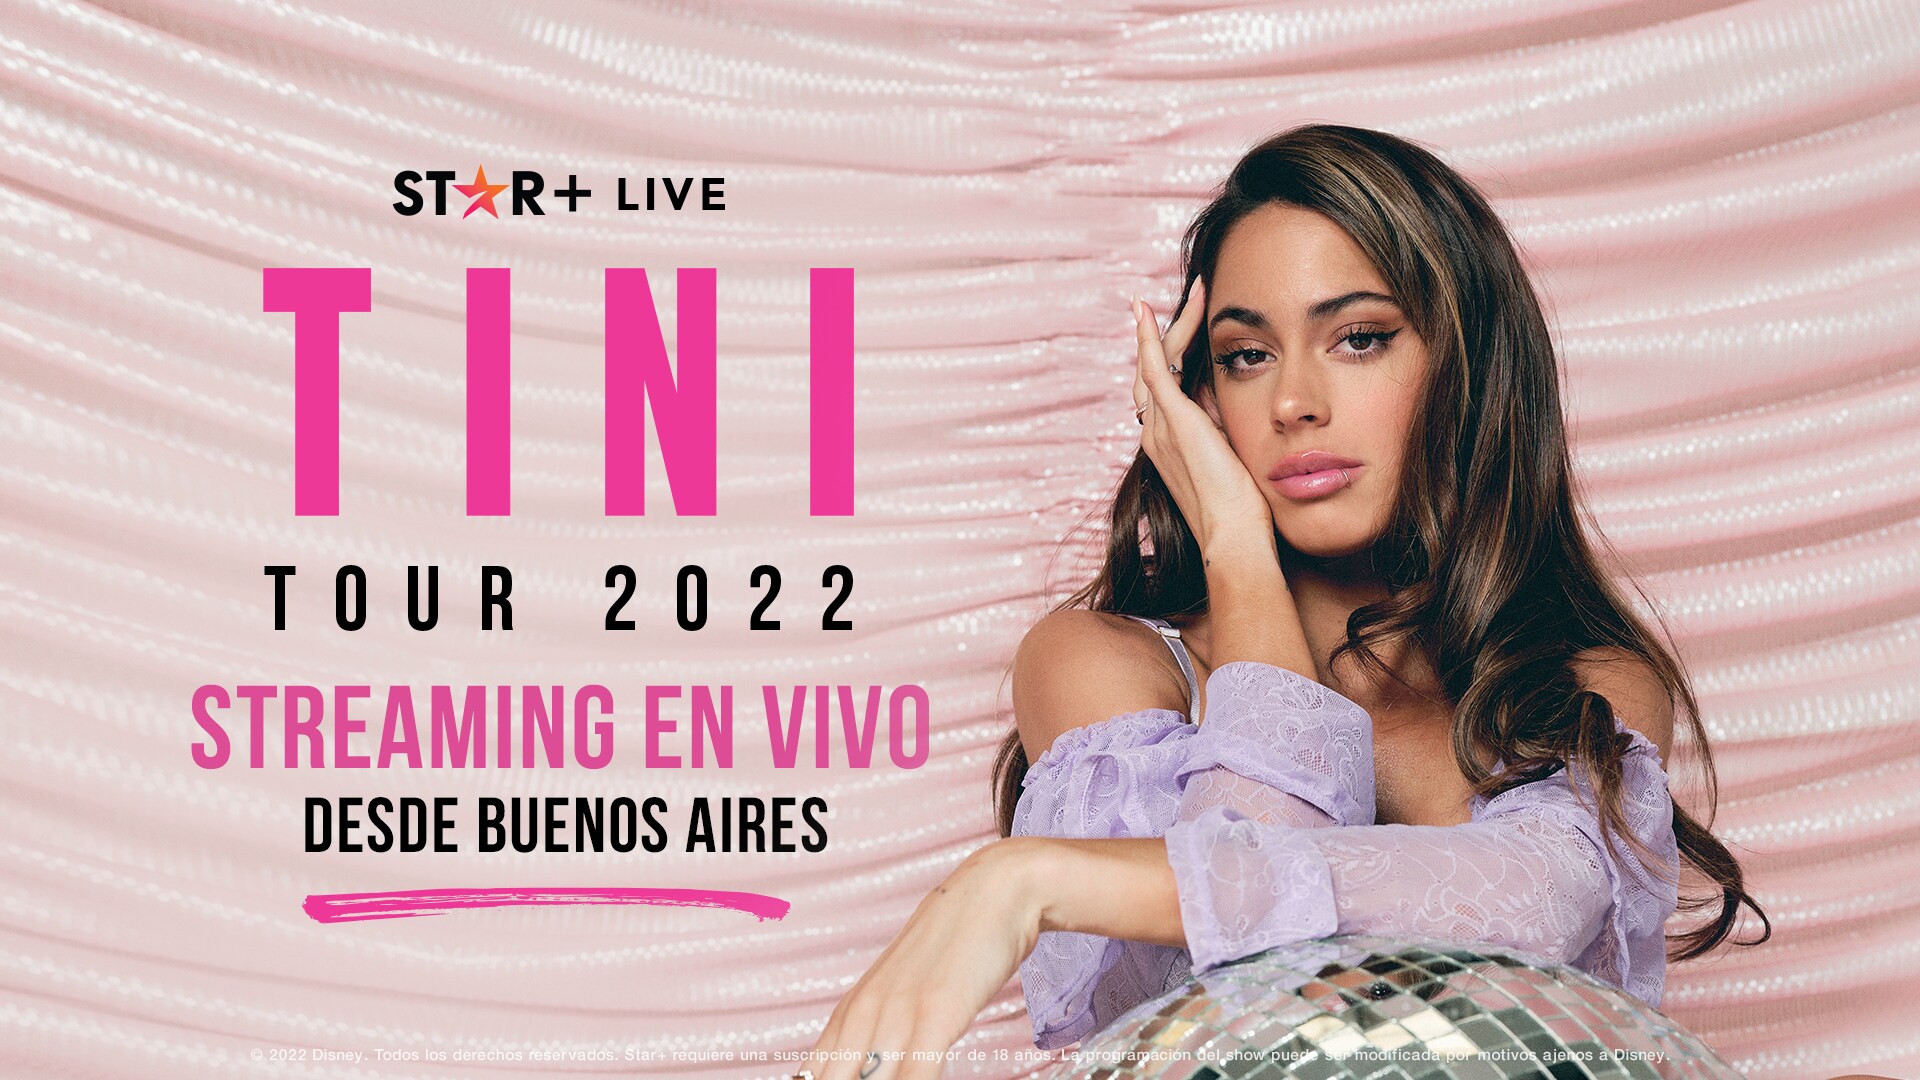 Star+ Live: Tini Tour 2022